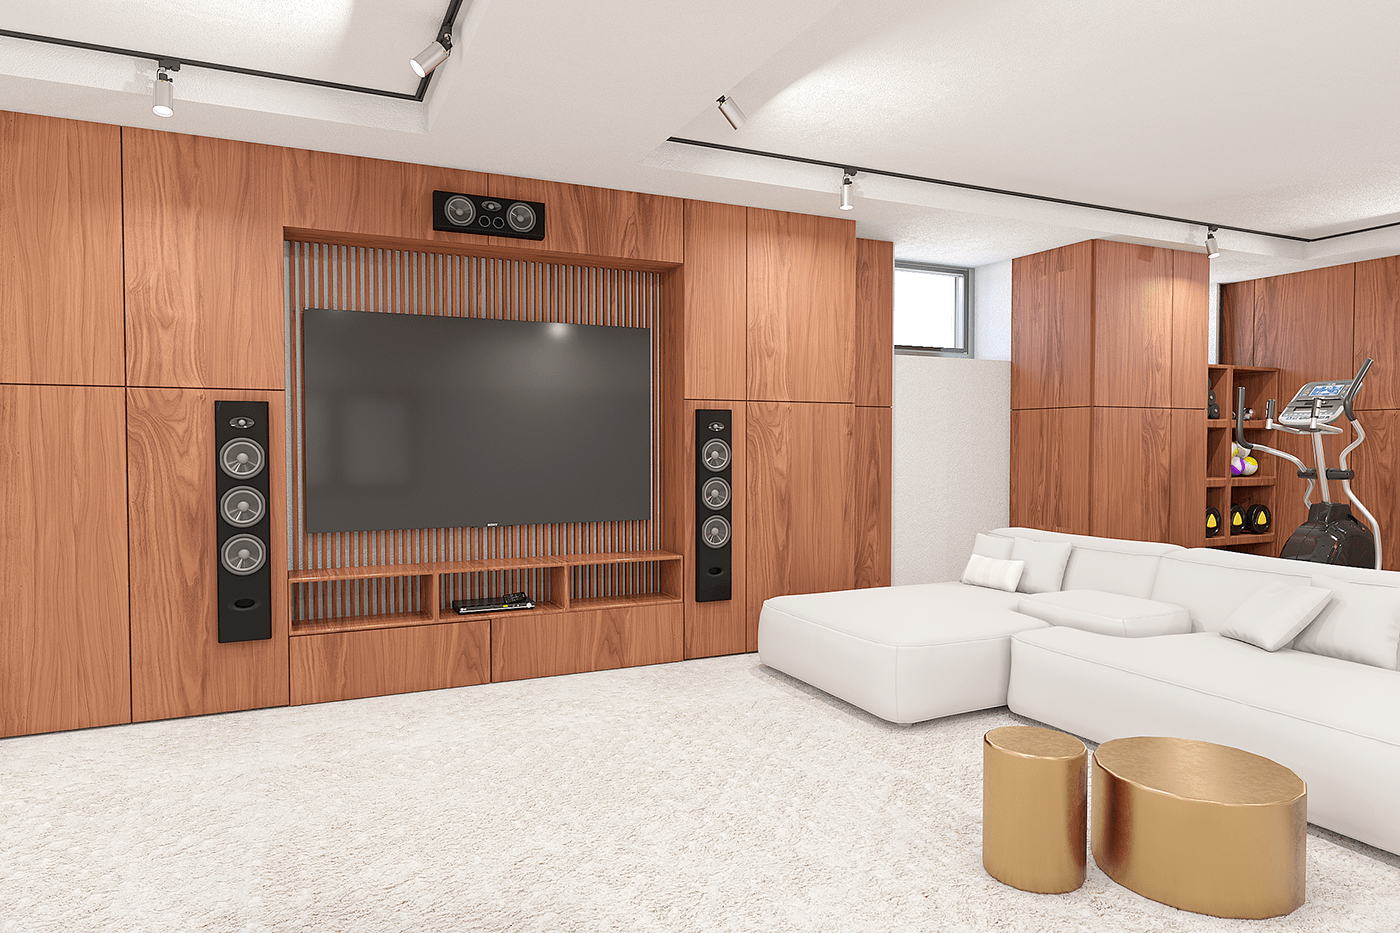 3D 3ds max 3dsmax Interior interior design  Render visualization Визуализация интерьера интерьер спортзал